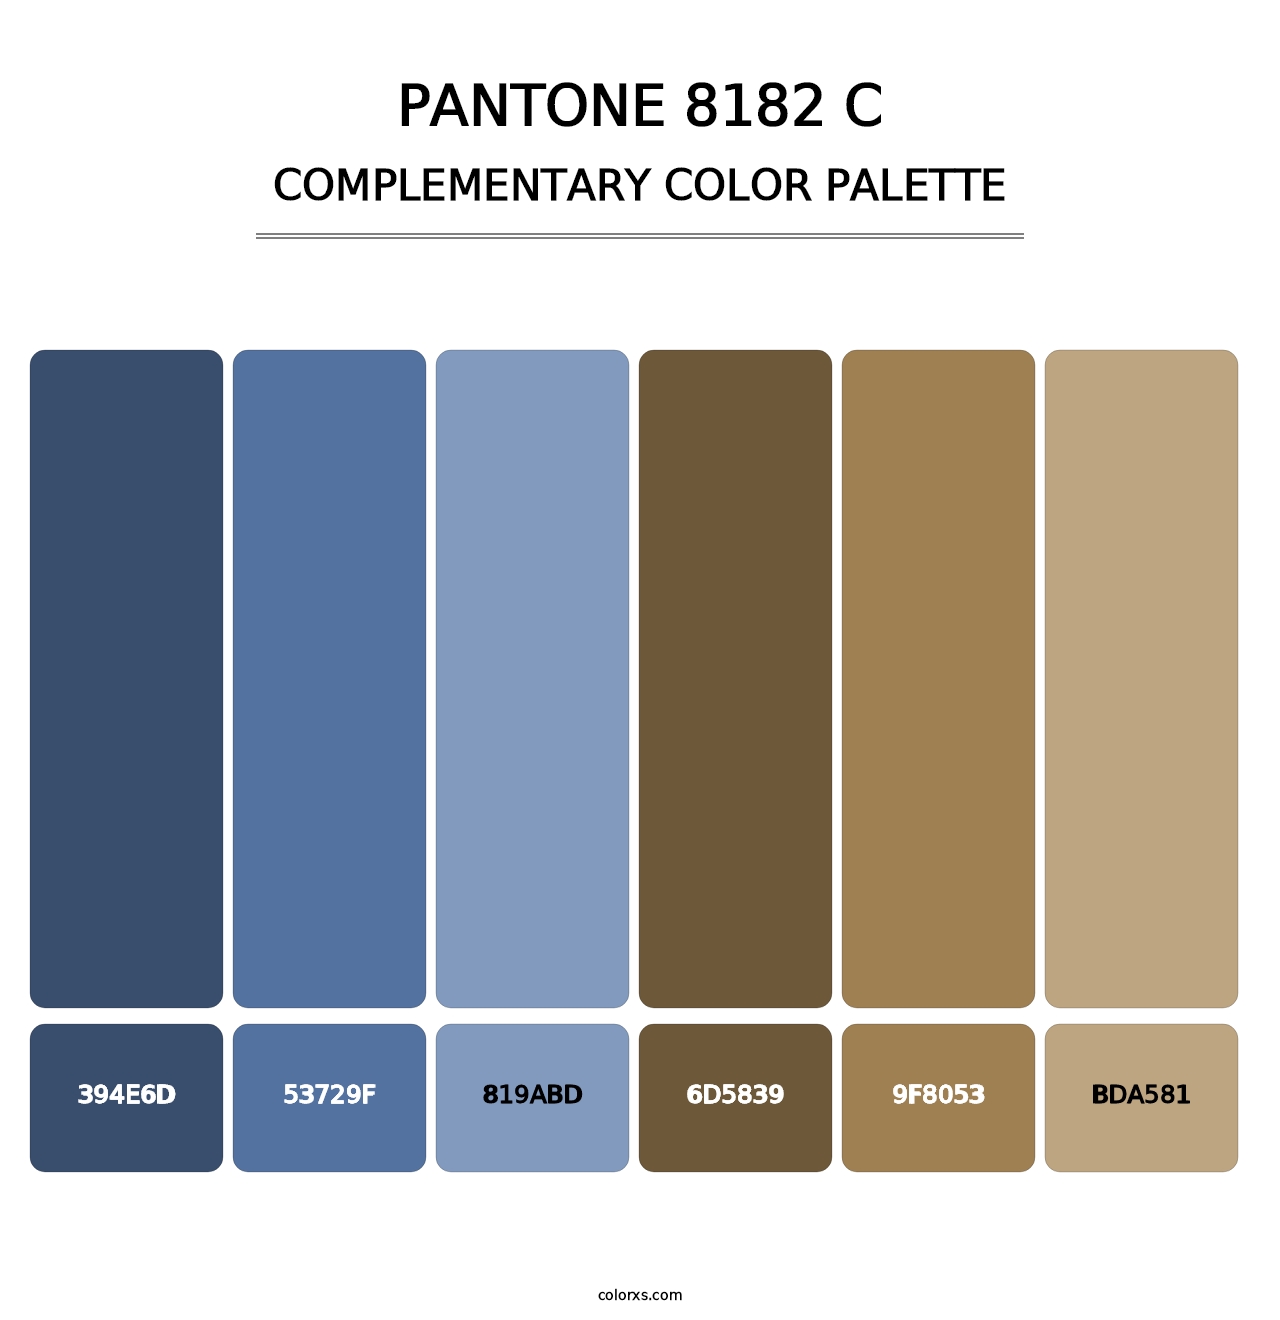 PANTONE 8182 C - Complementary Color Palette